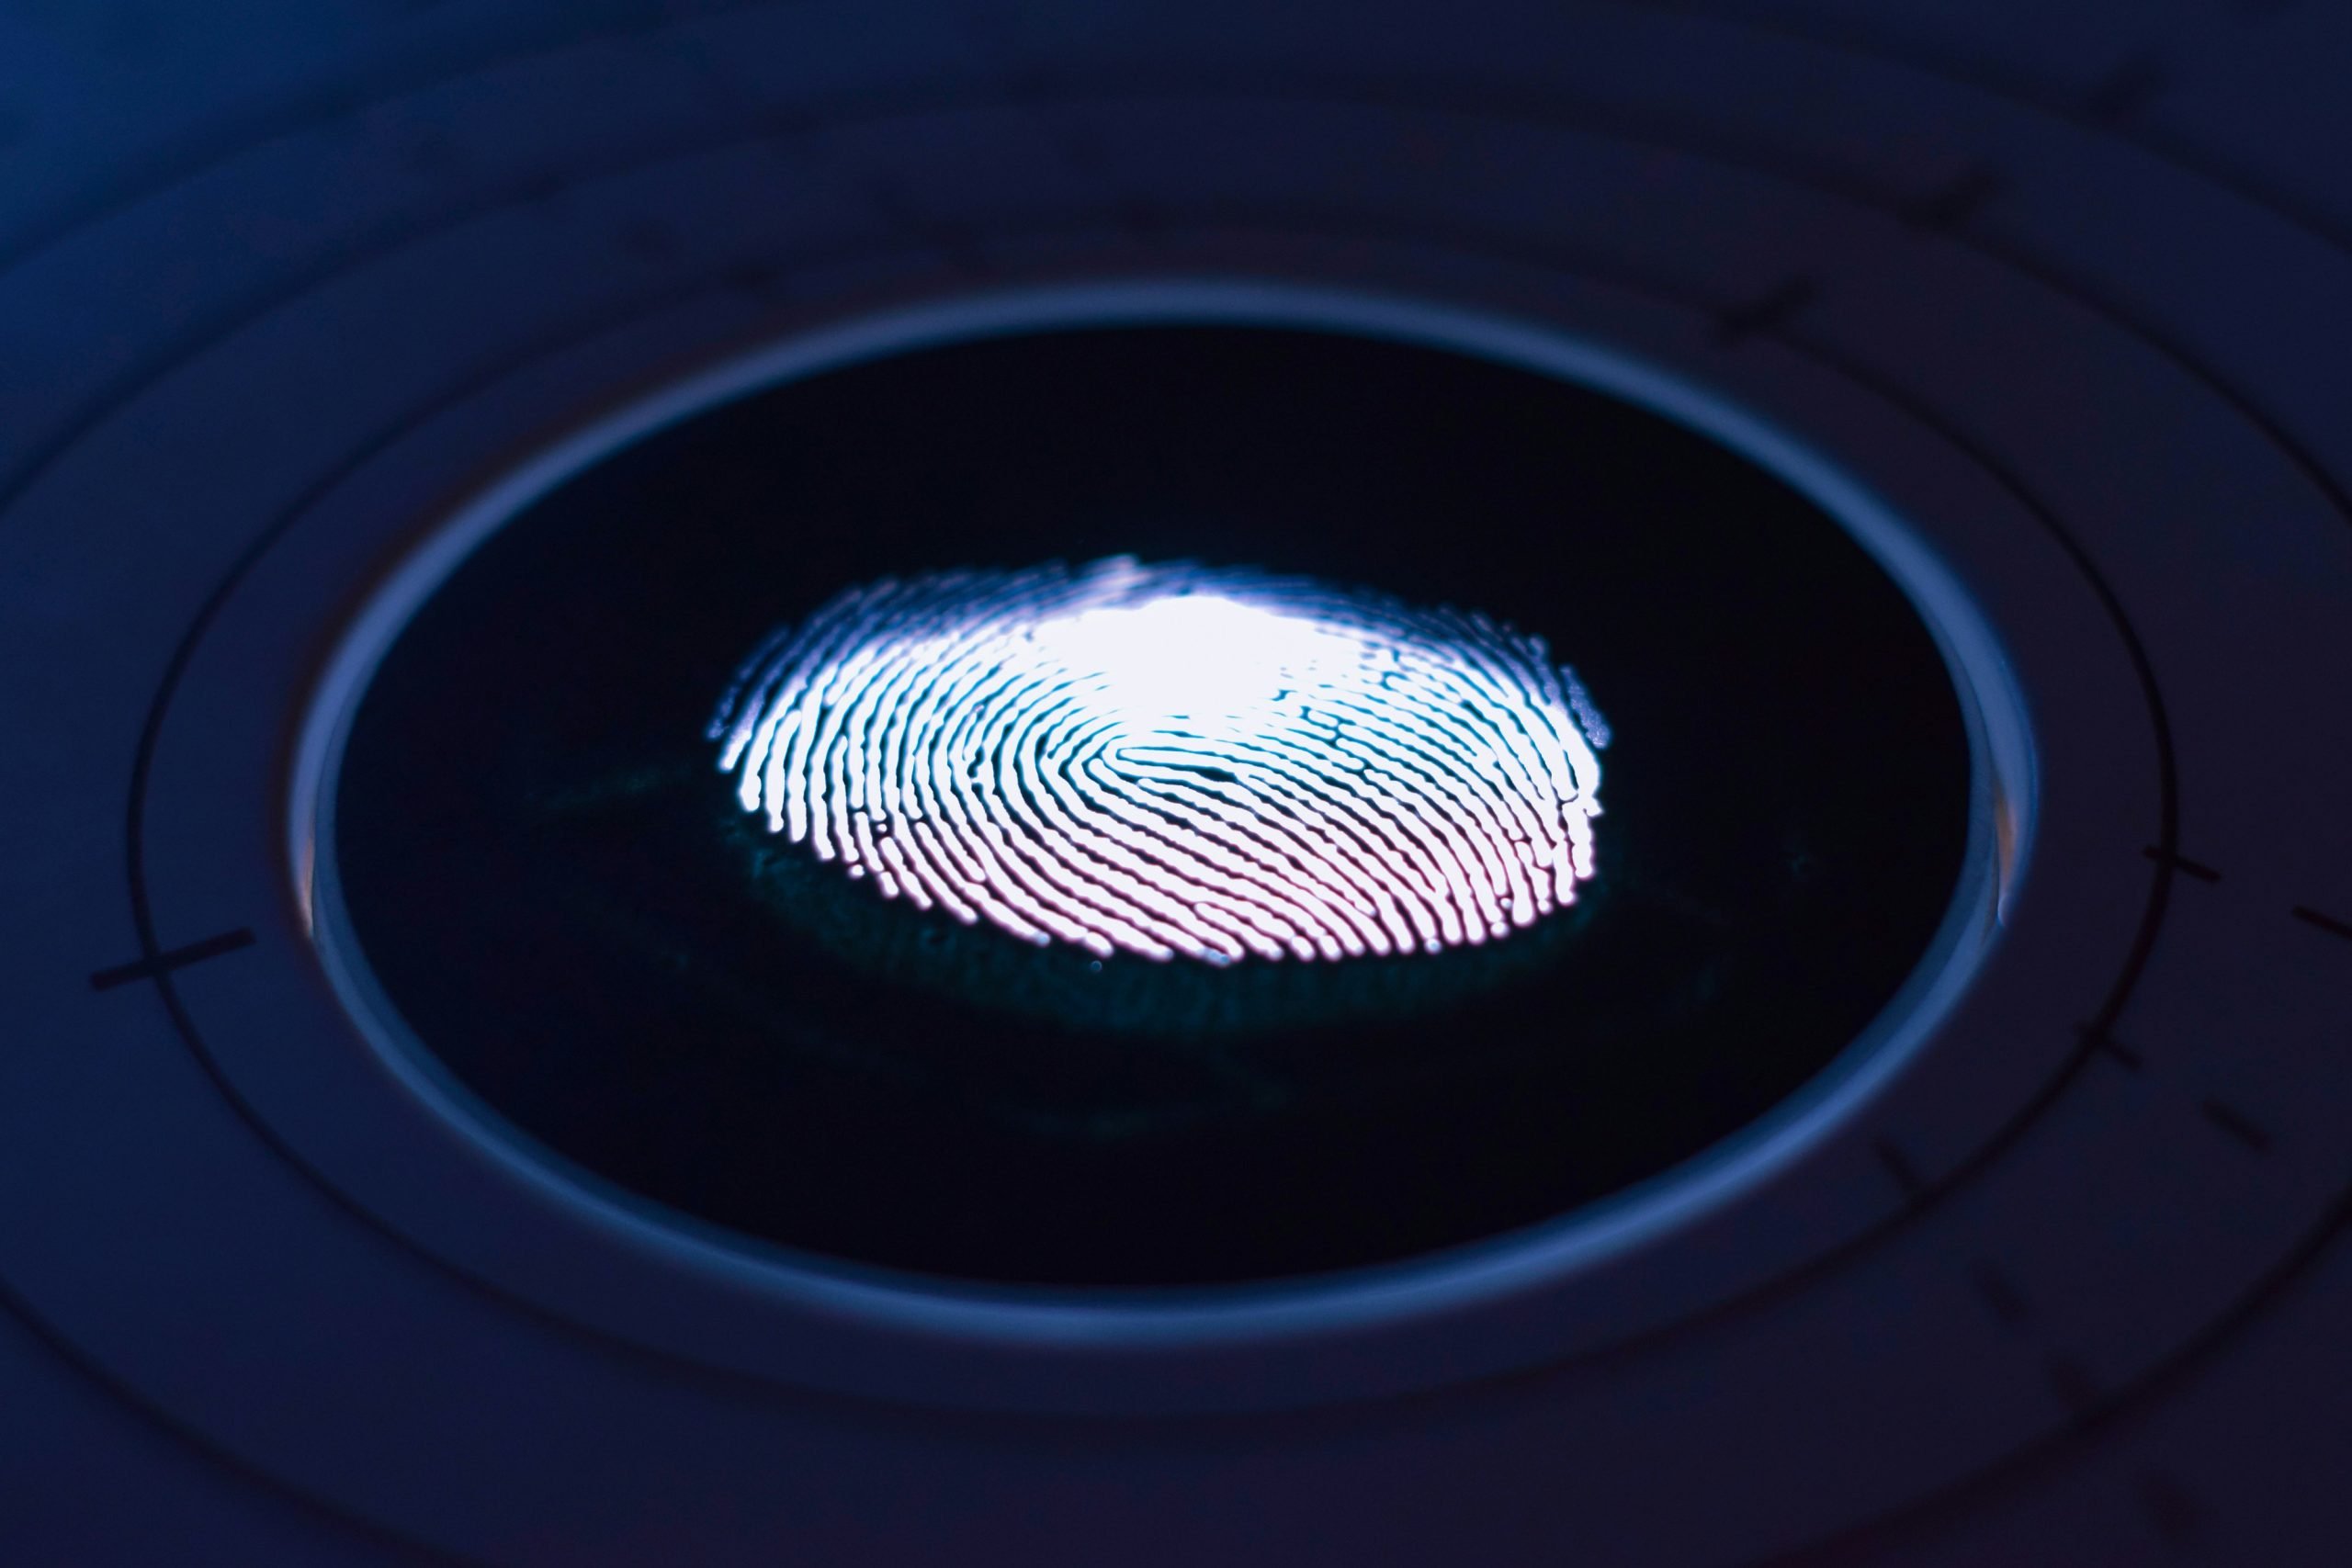 Huawei’s New Patent for an Ultrasonic Fingerprint Sensor has Surfaced Online - Huawei - News